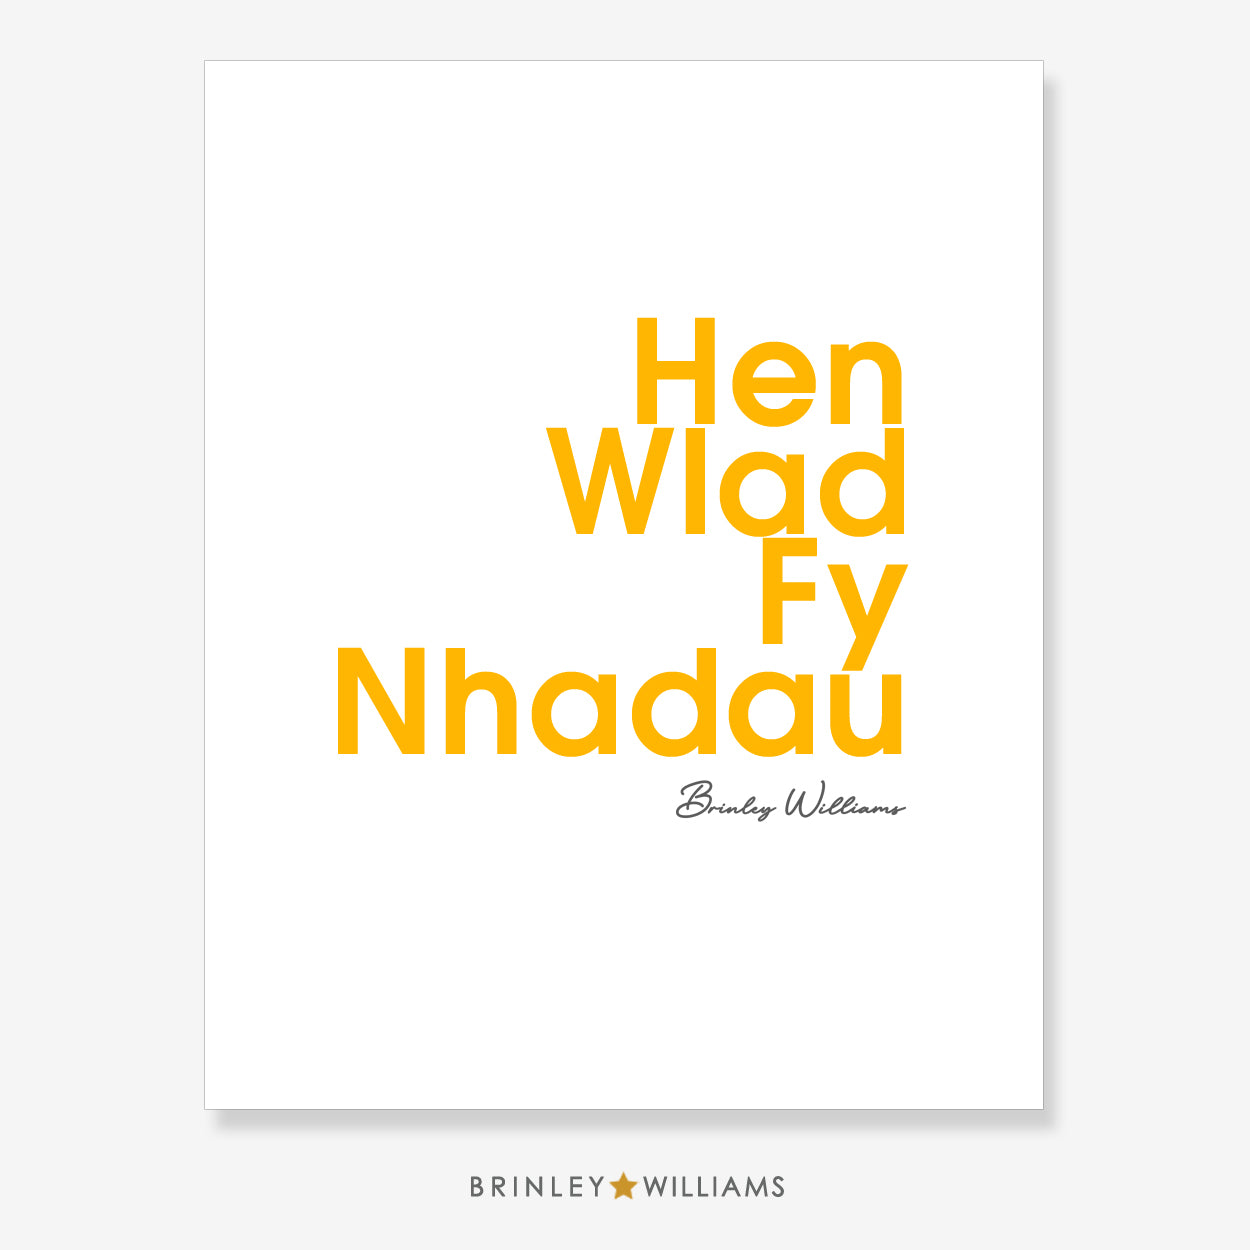 Hen Wlad Fy Nhadau Wall Art Poster - Yellow